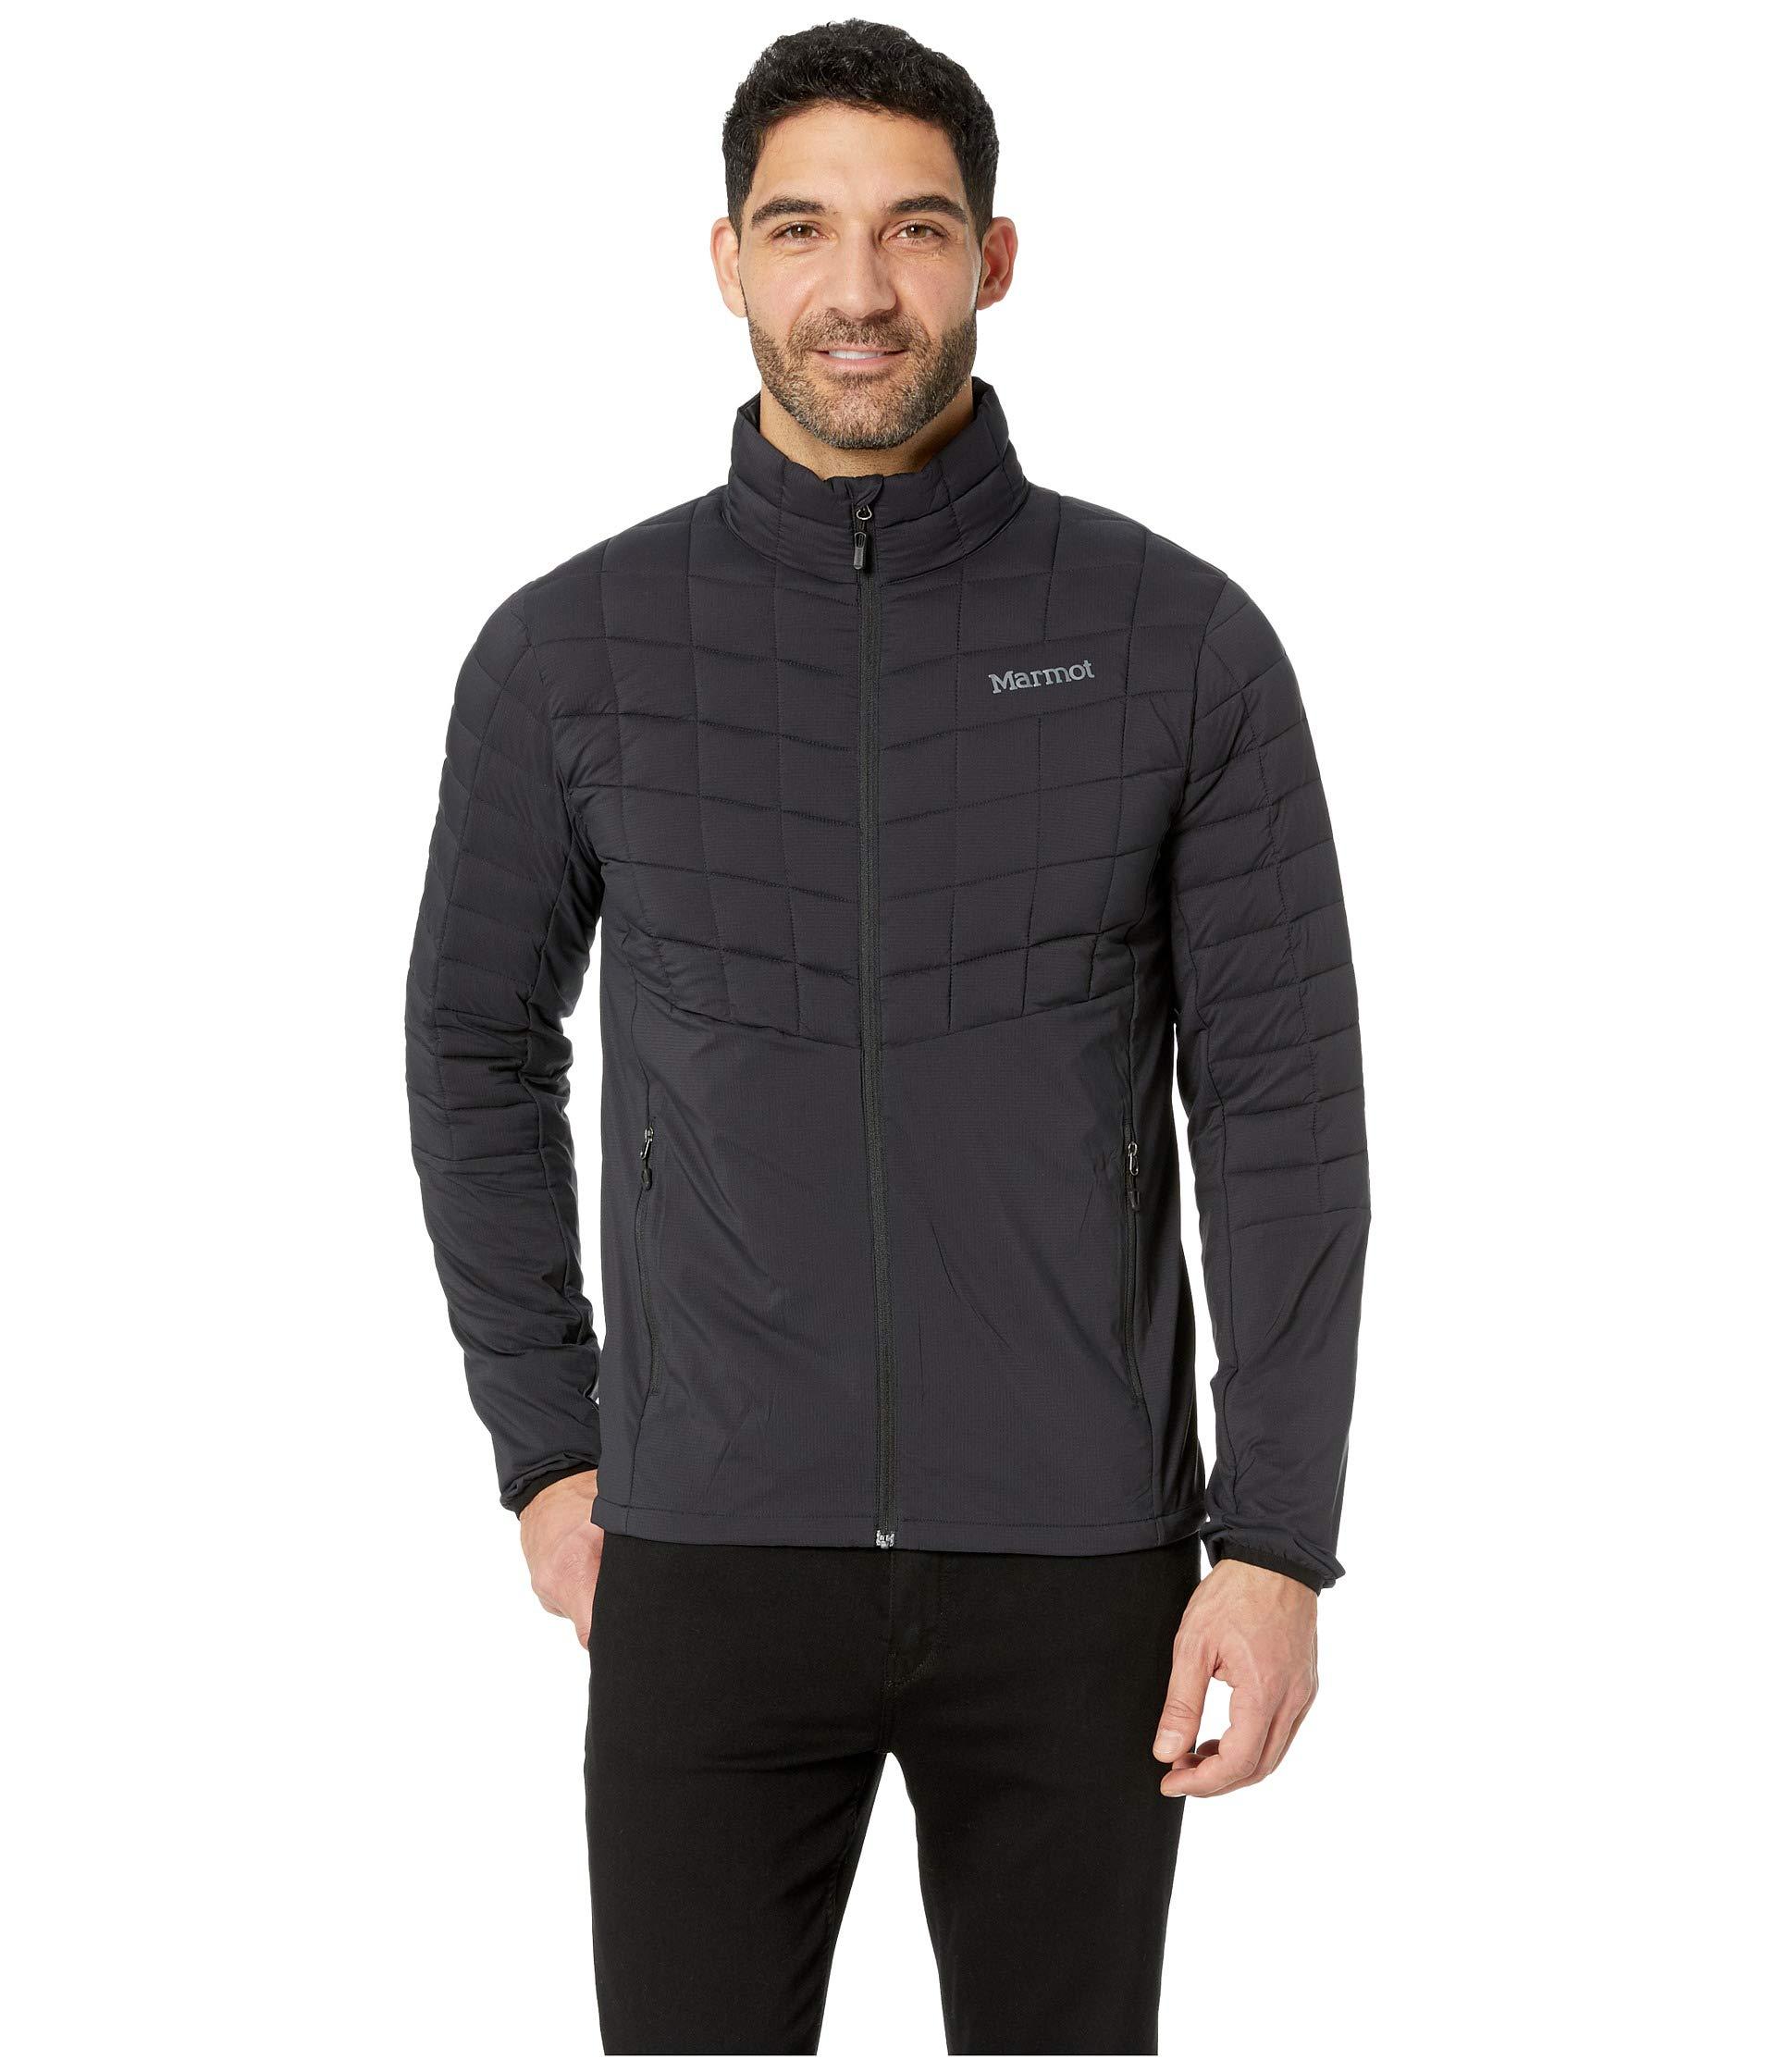 Marmot Synthetic Featherless Hybrid Jacket in Black for Men - Lyst